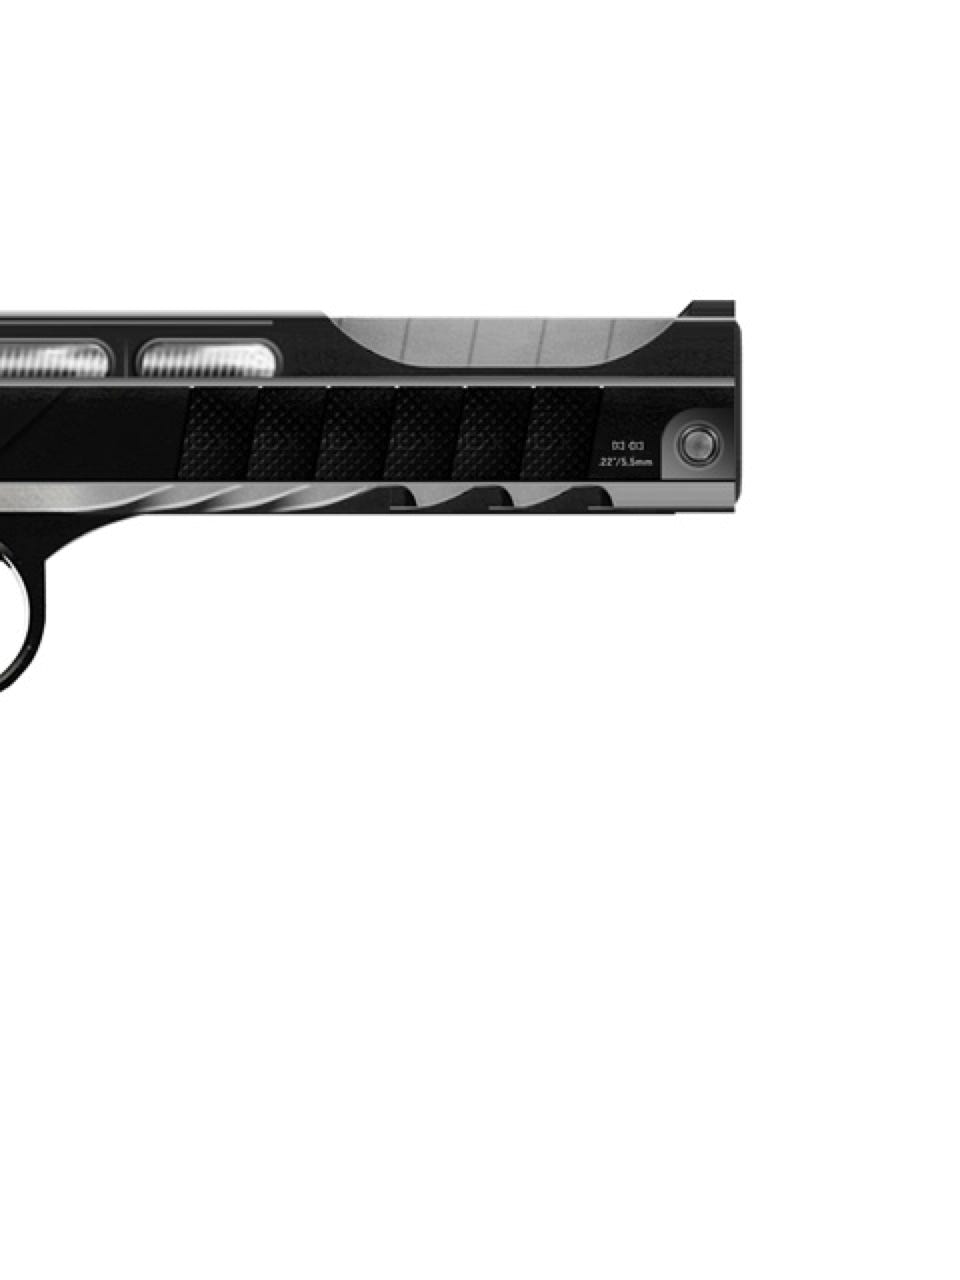 Pistol: SKULL P-7 / High power and precision air gun pistol